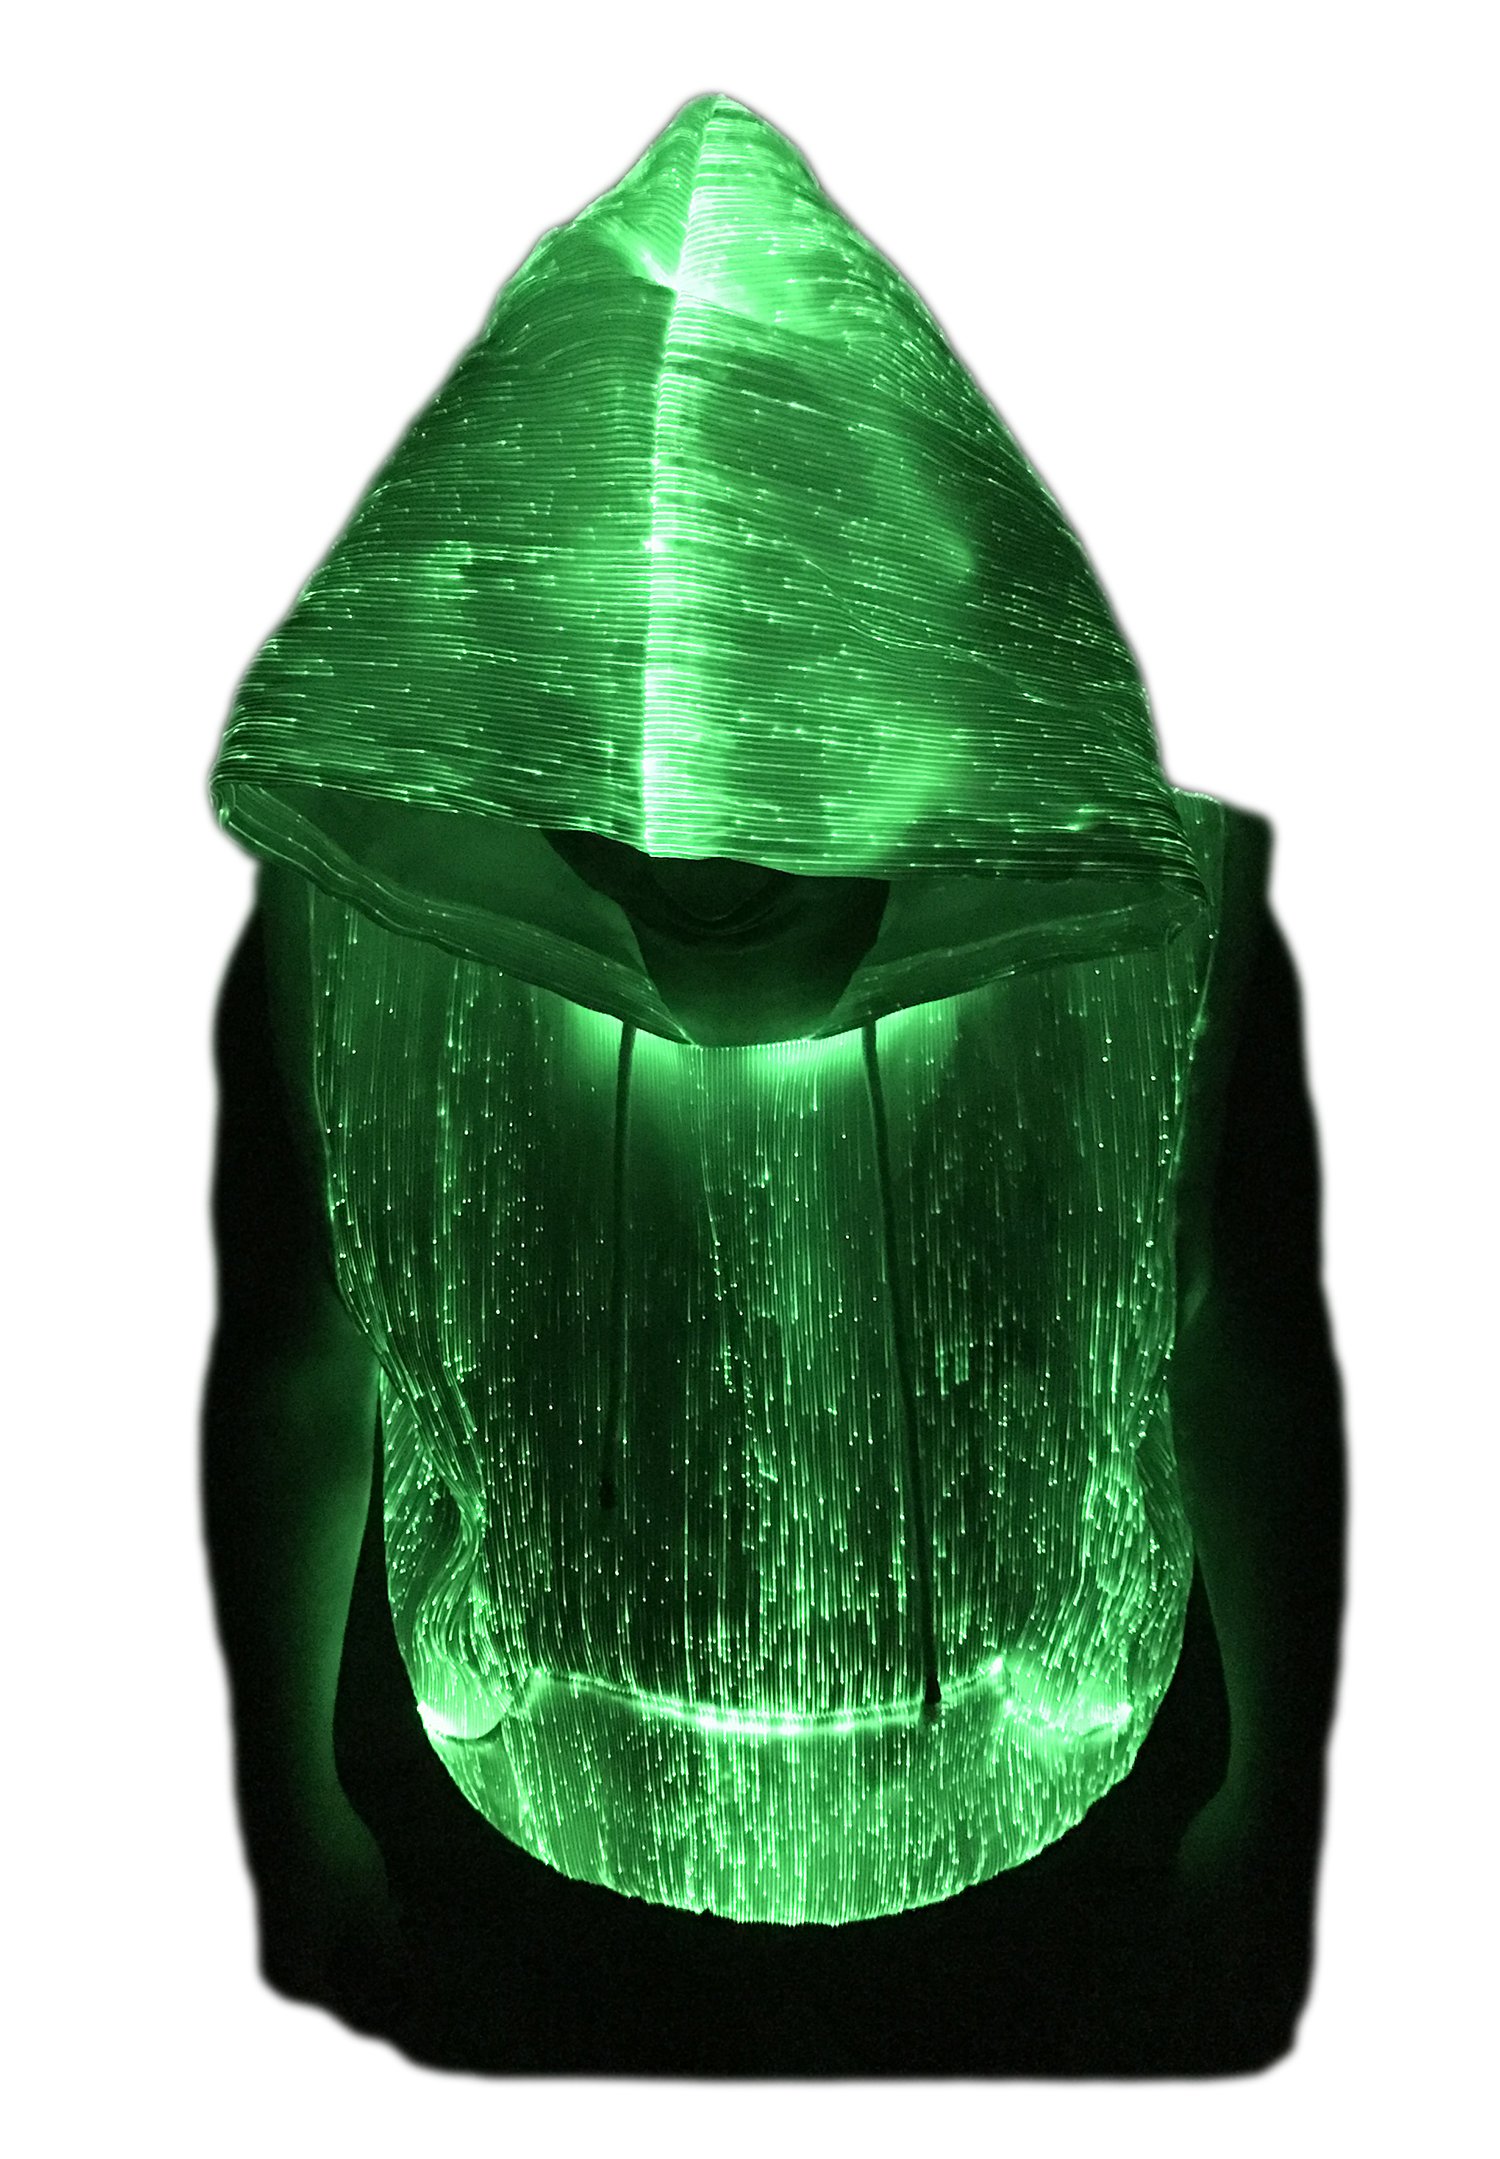 Light up Cool Hoodies LED Fiber Optic Sleeveless Costume Hoodie Glow in The Dark Sweatshirts,Mobile APP Control